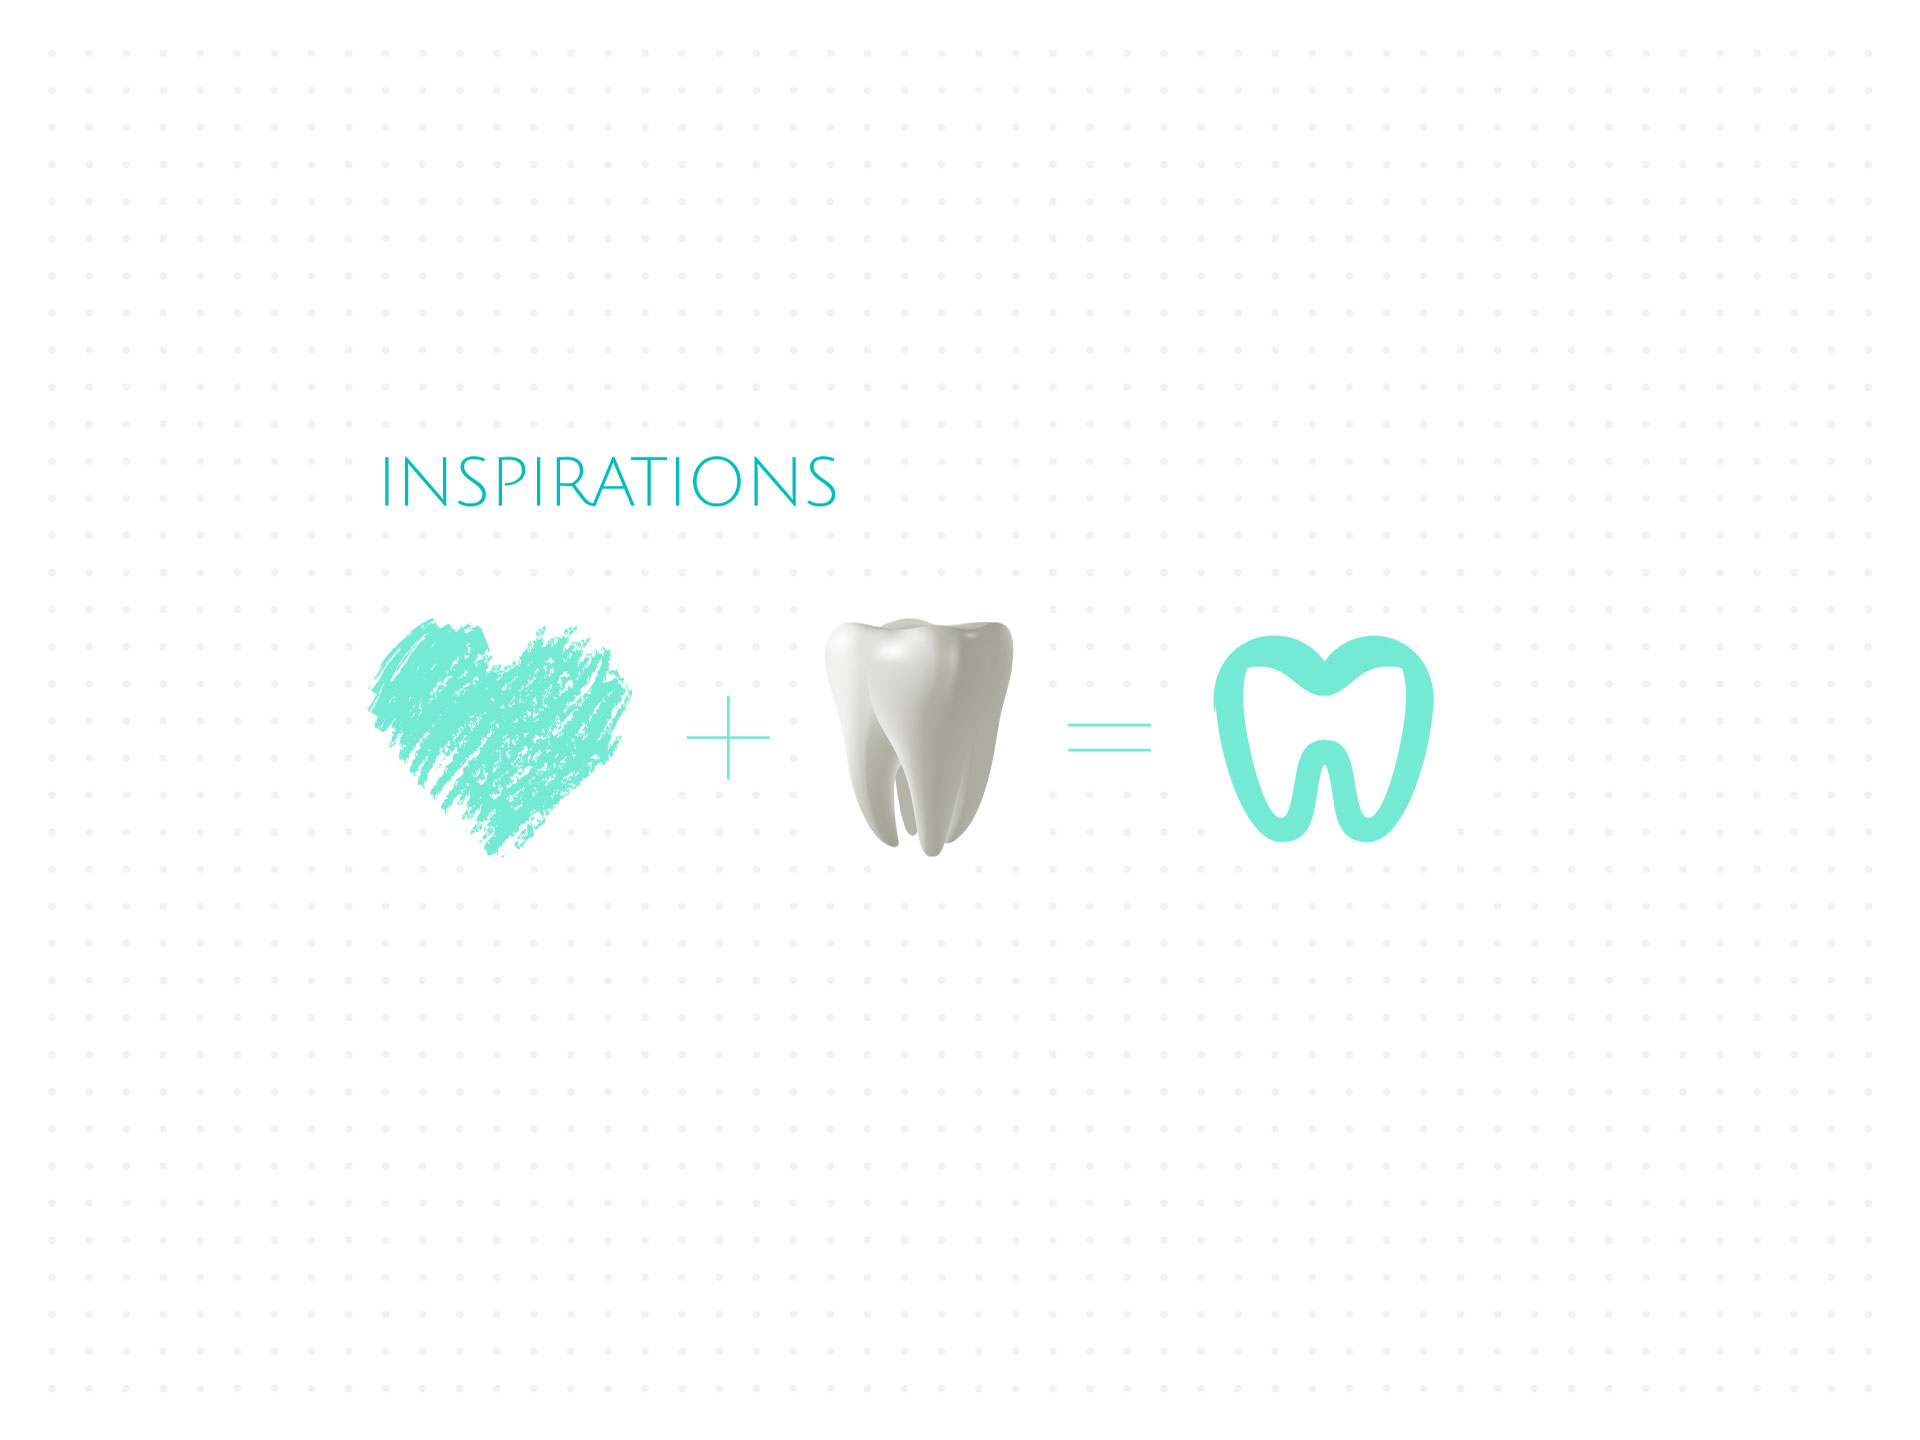 knoxfield dental medical branding by Z Creative Studio Branding & Graphic Design Melbourne